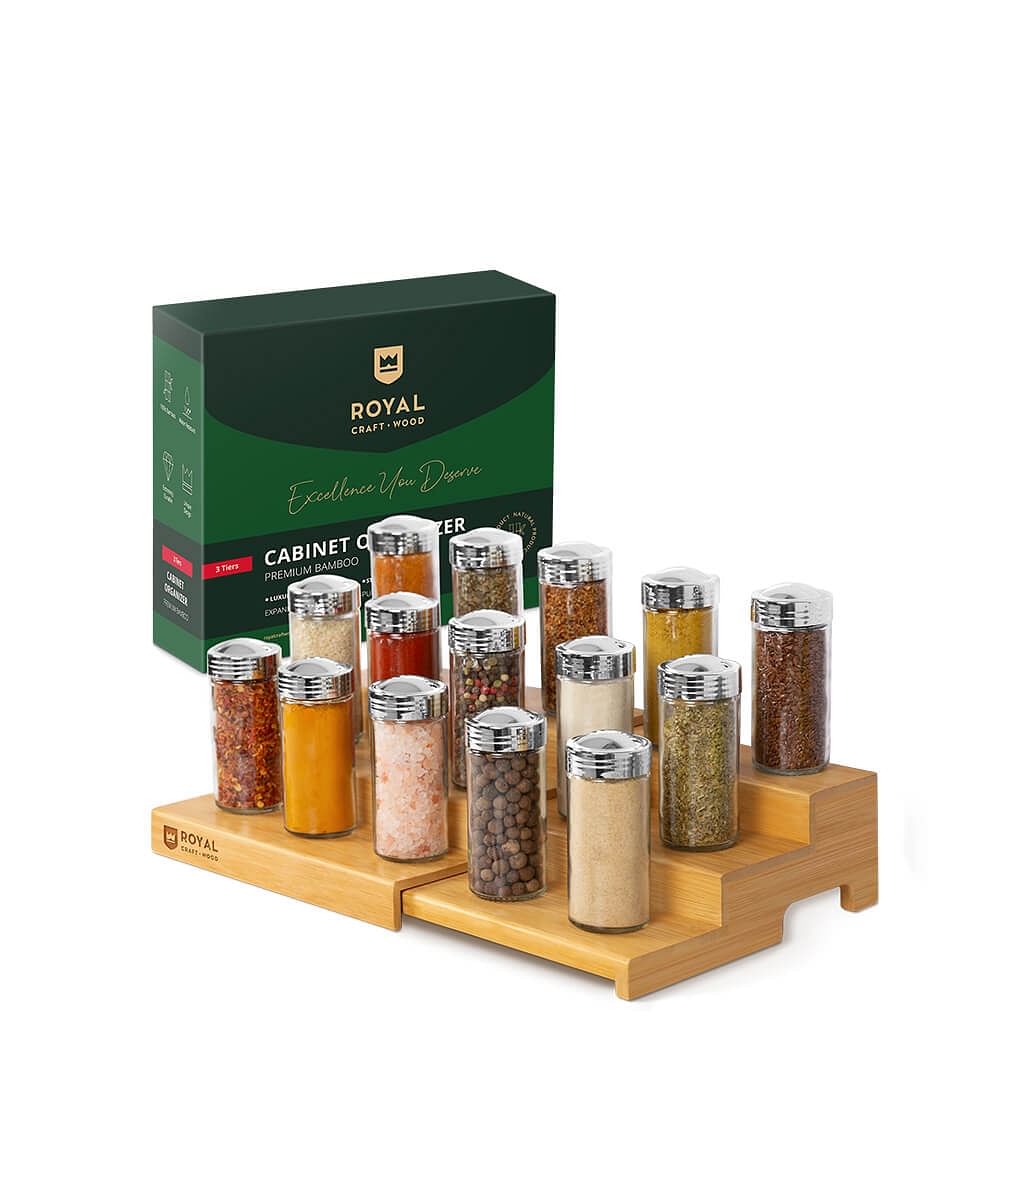 Pantry Spice Organizer | Royal Craft Wood